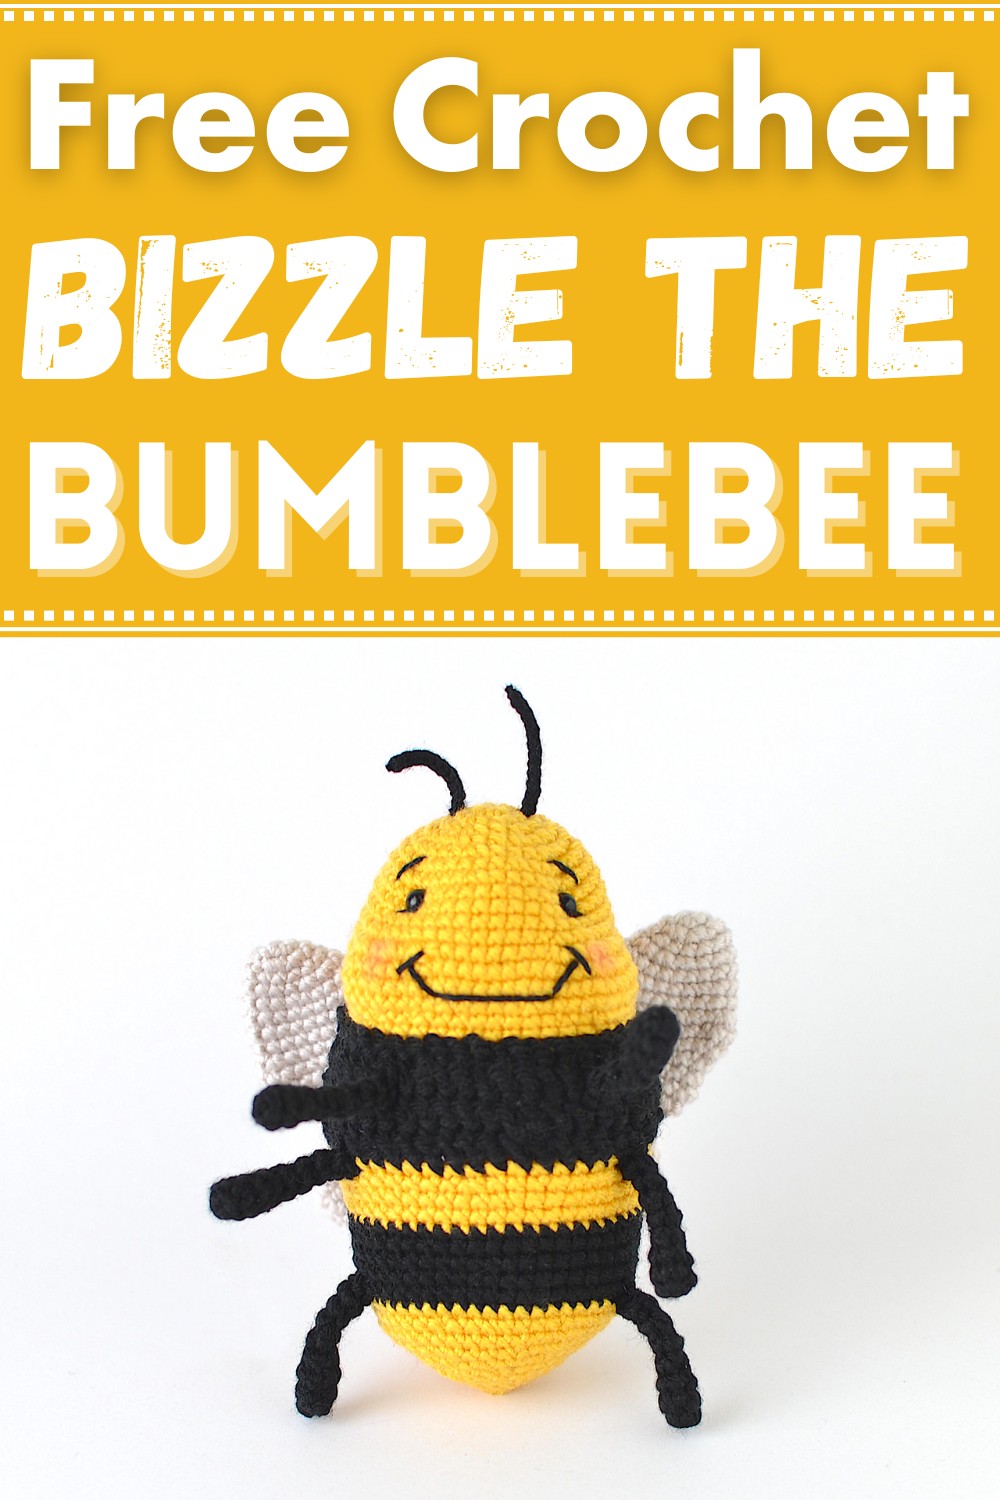 Bizzle The Bumblebee